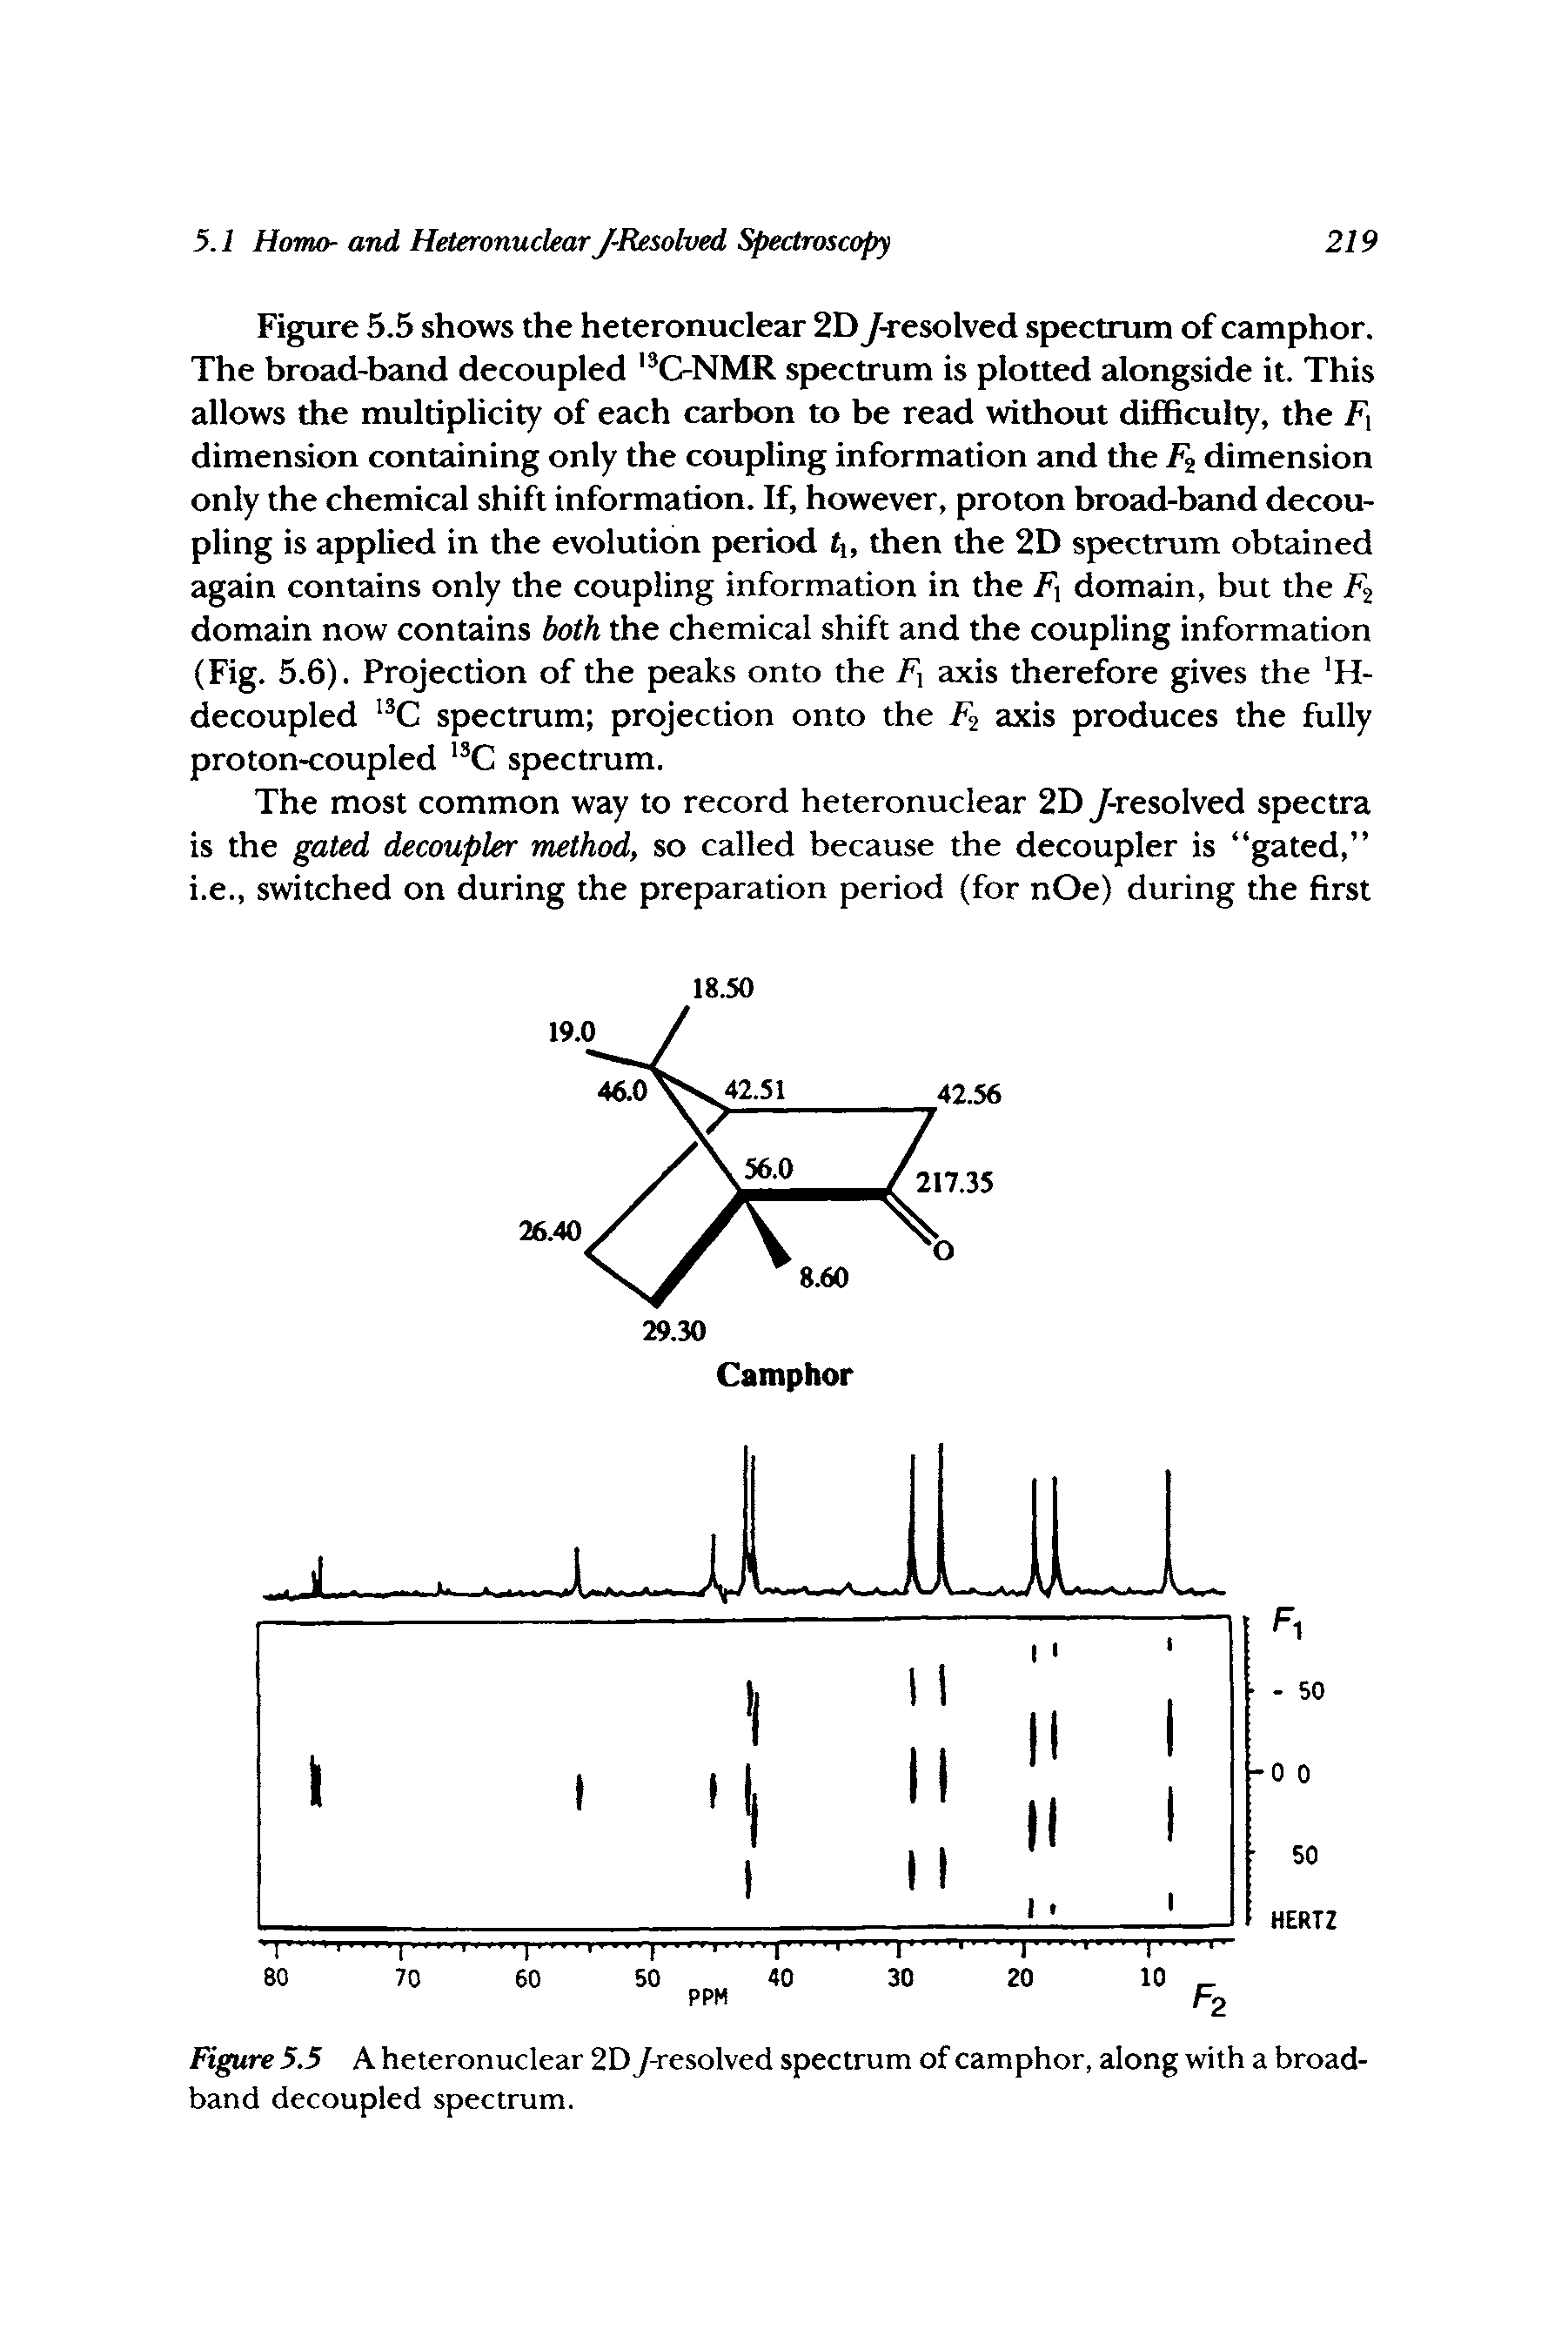 Figure 5.5 A heteronuclear 2D /-resolved spectrum of camphor, along with a broadband decoupled spectrum.